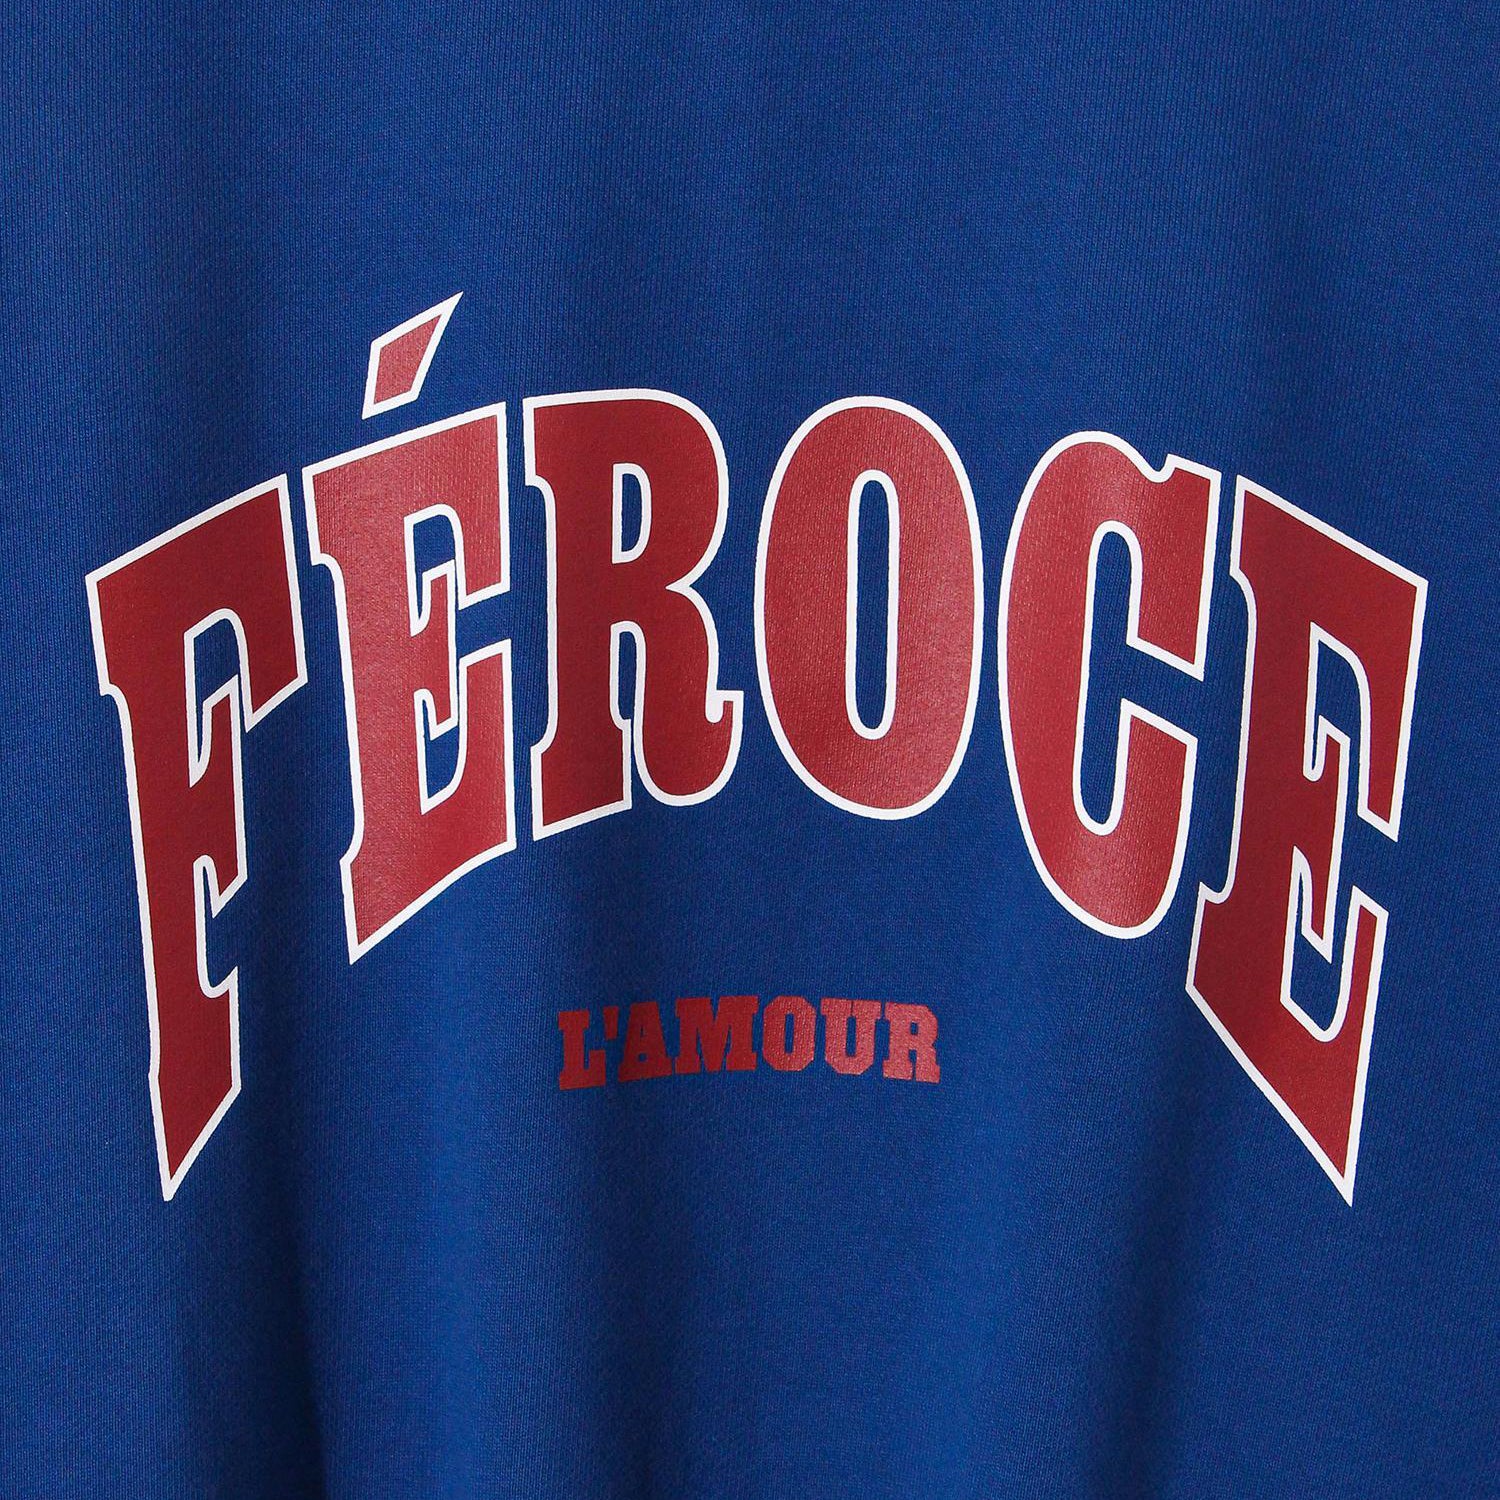 Feroce ArchロゴスウェットシャツT83-ブルー / Feroce Arch Logo Sweatshirt T83 - Blue